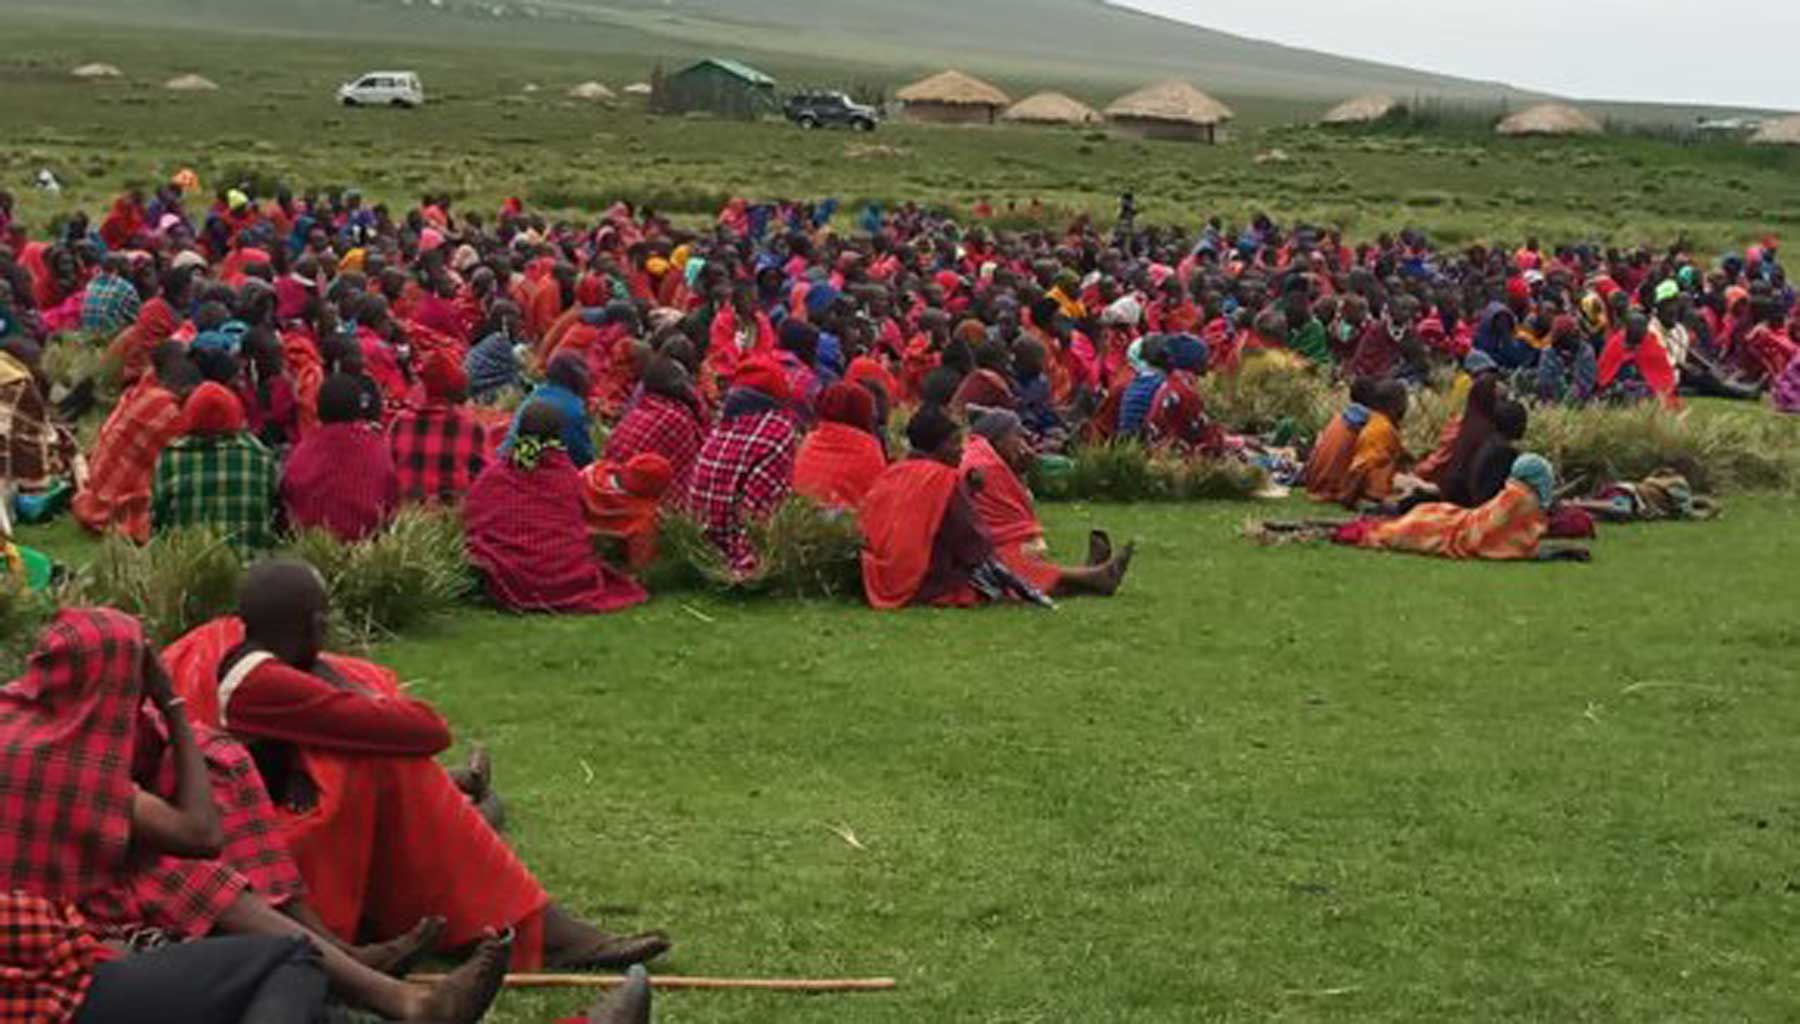 Over 700 Maasai gathered in Oloirobi village